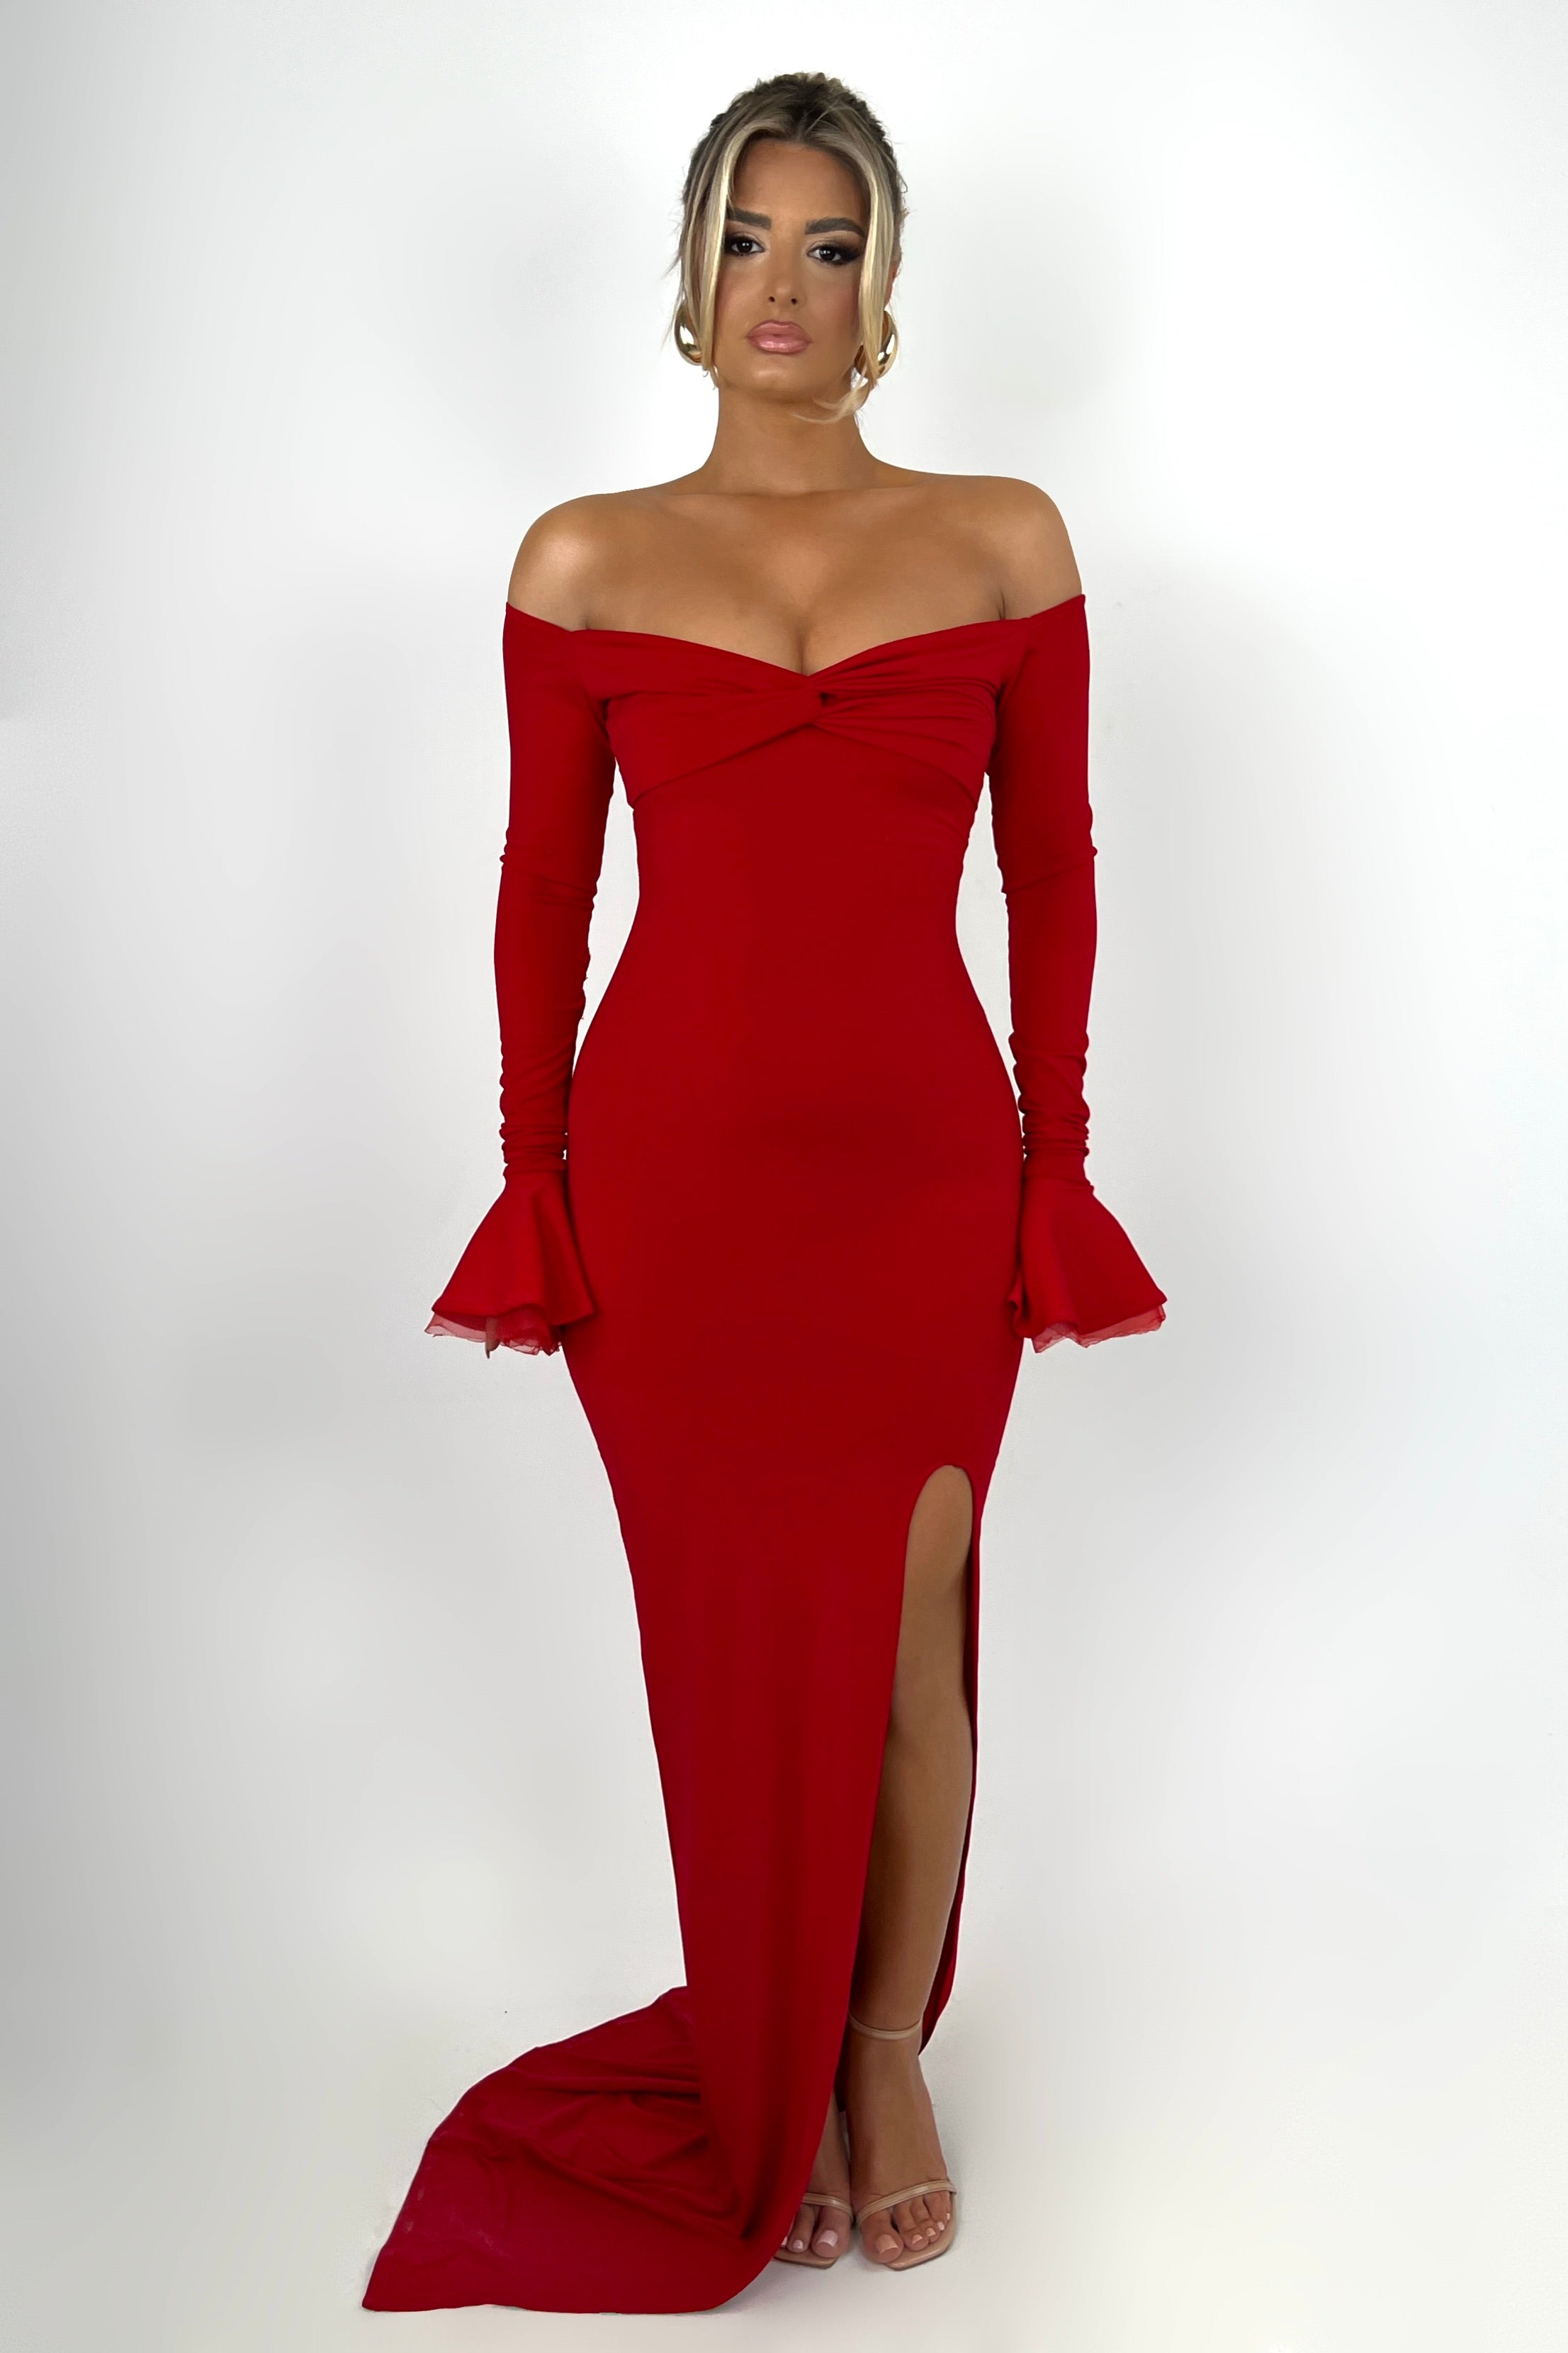 Riyana Red Dress